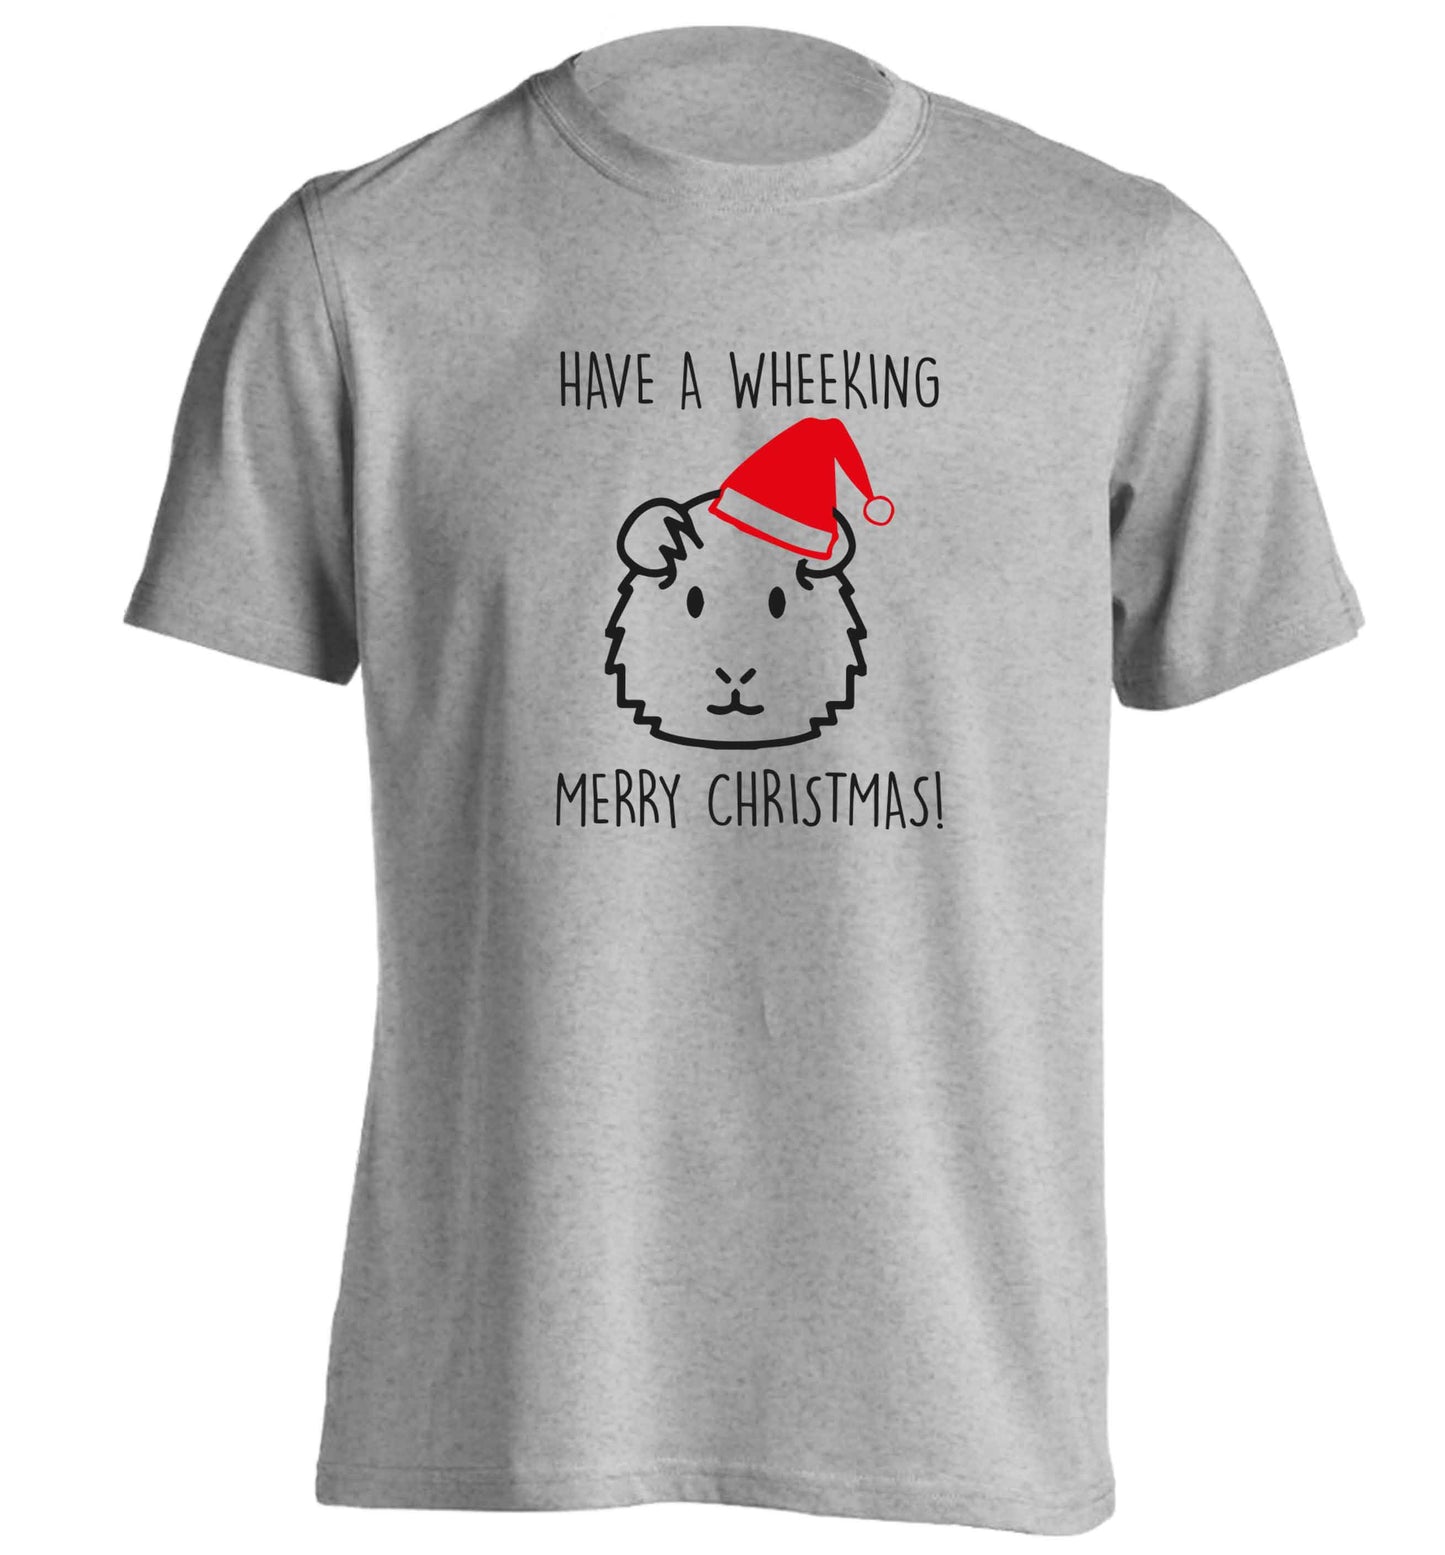 Have a wheeking merry Christmas adults unisex grey Tshirt 2XL